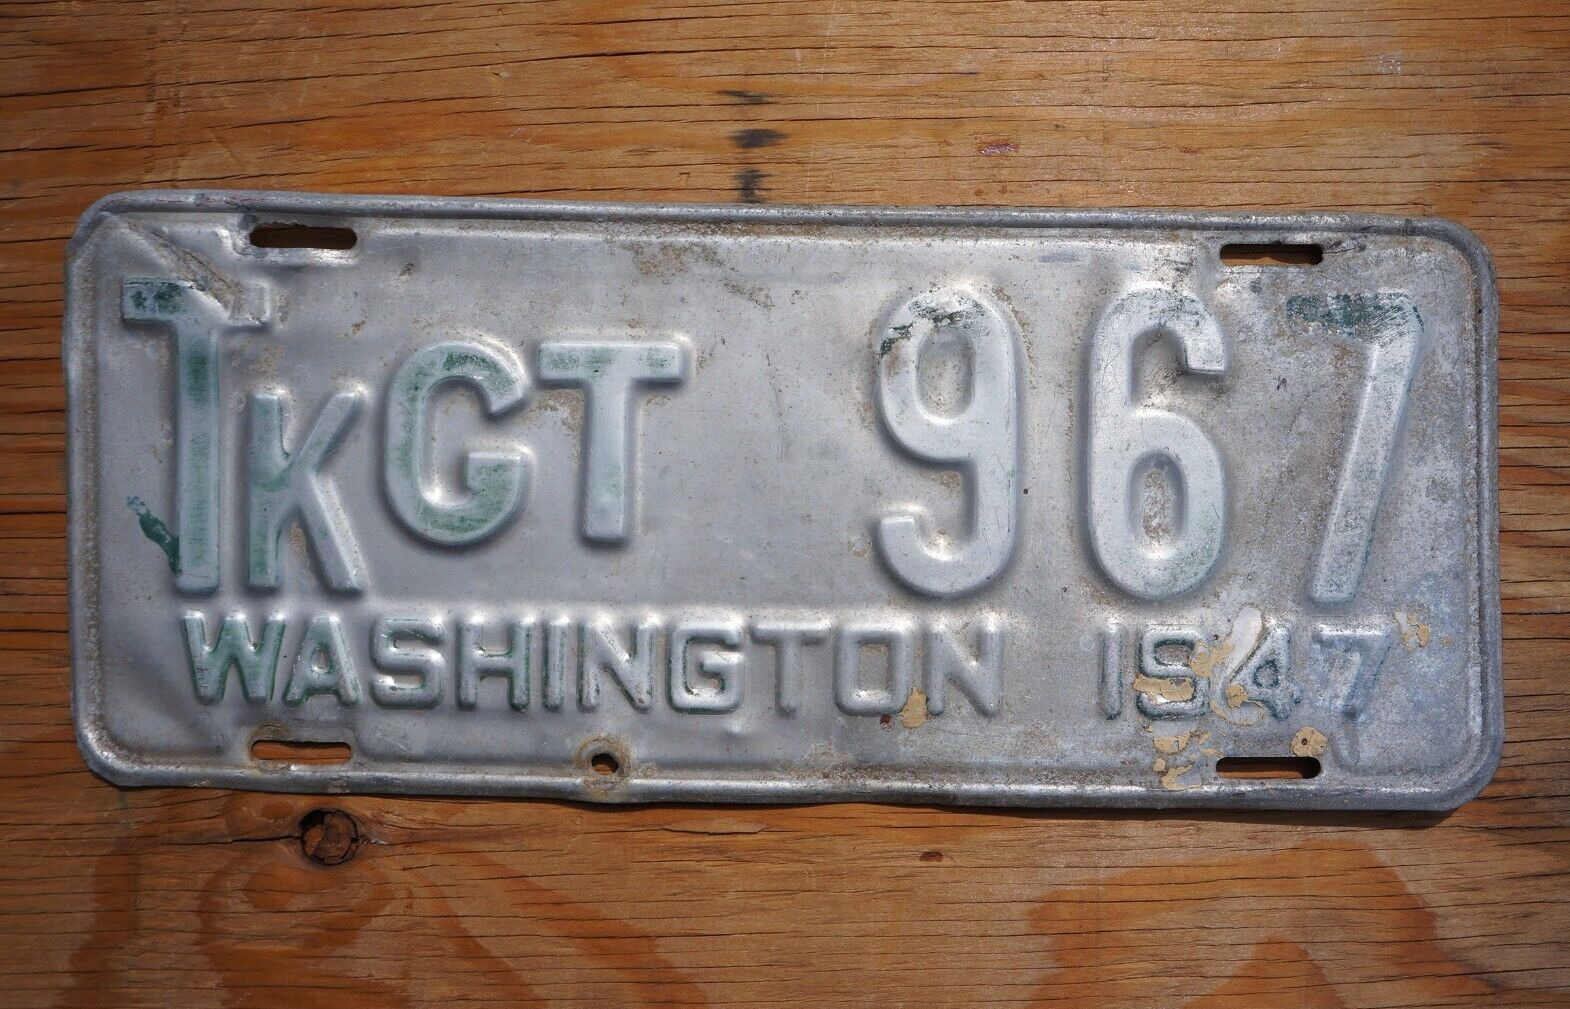 1947 WASHINGTON Truck License Plate # 967